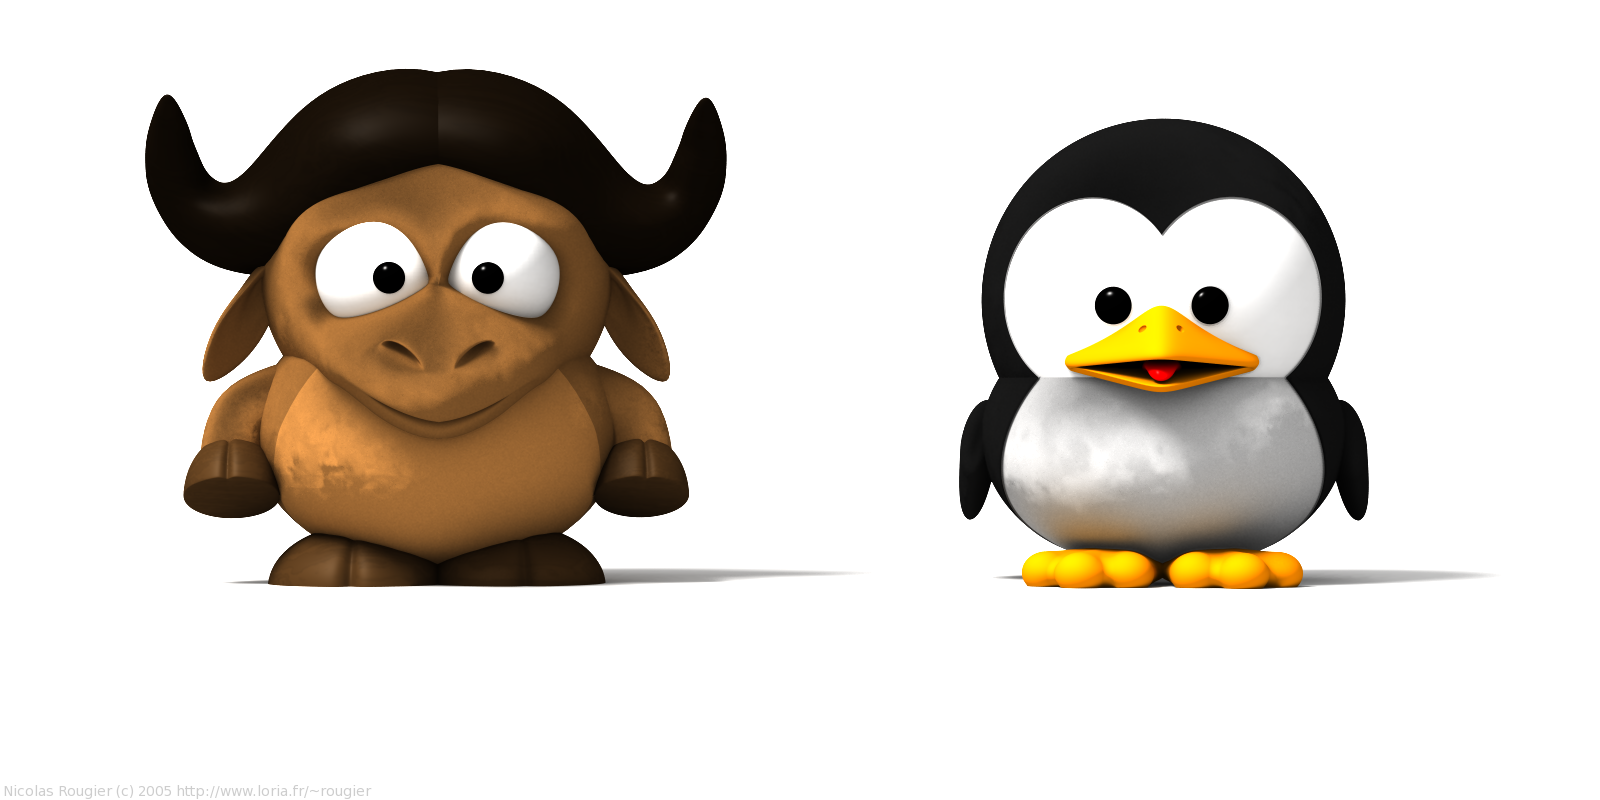 GNU and penguin